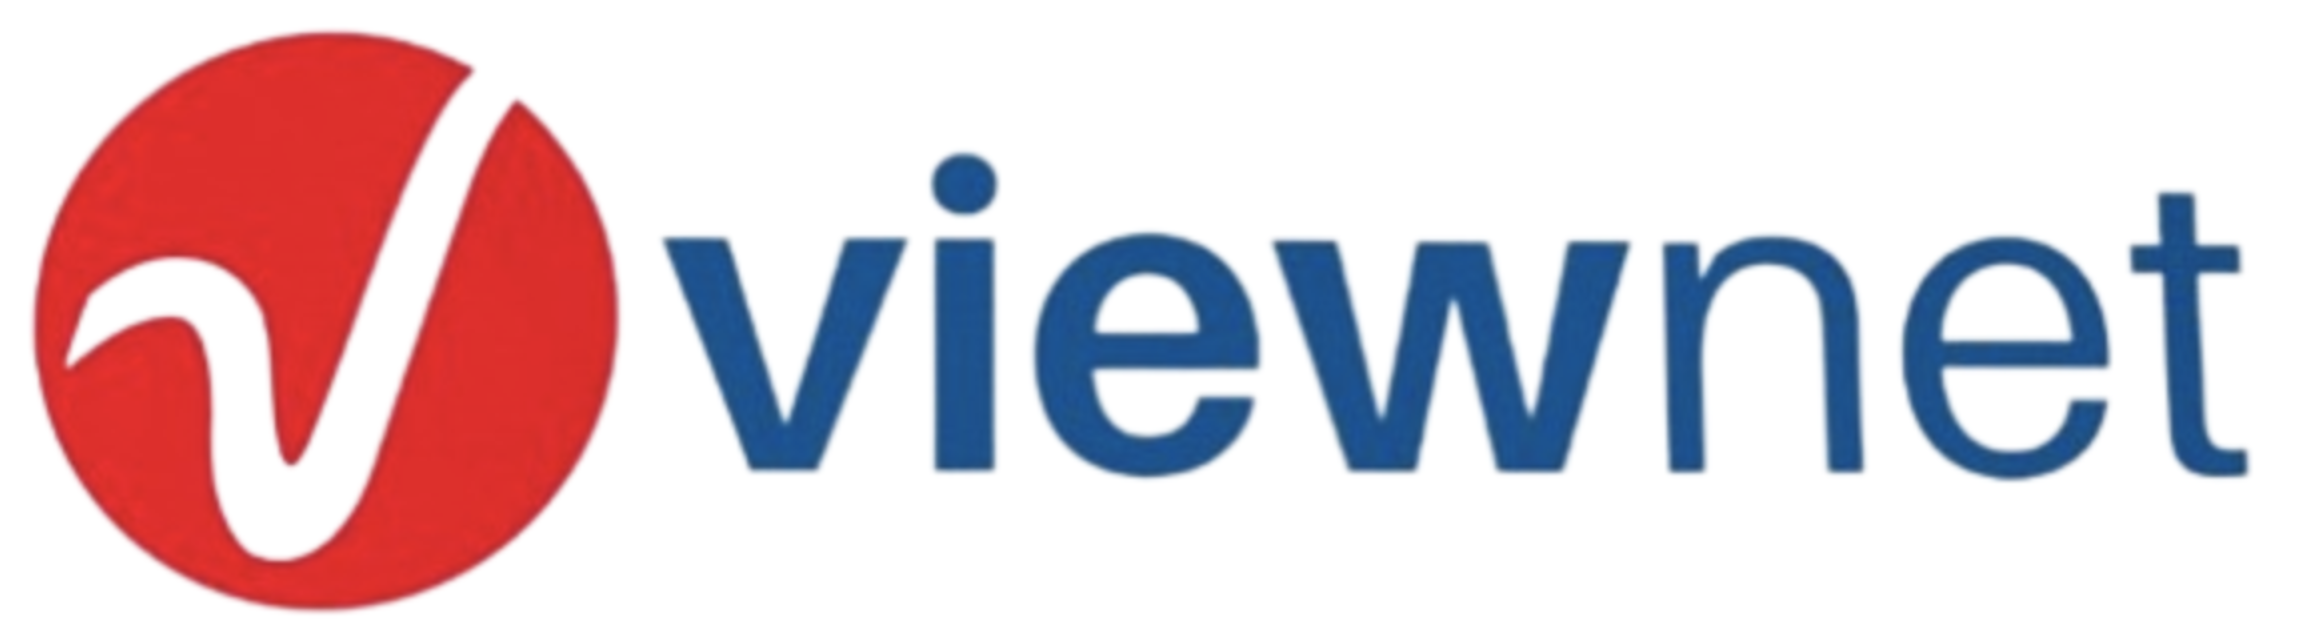 ViewNet logo